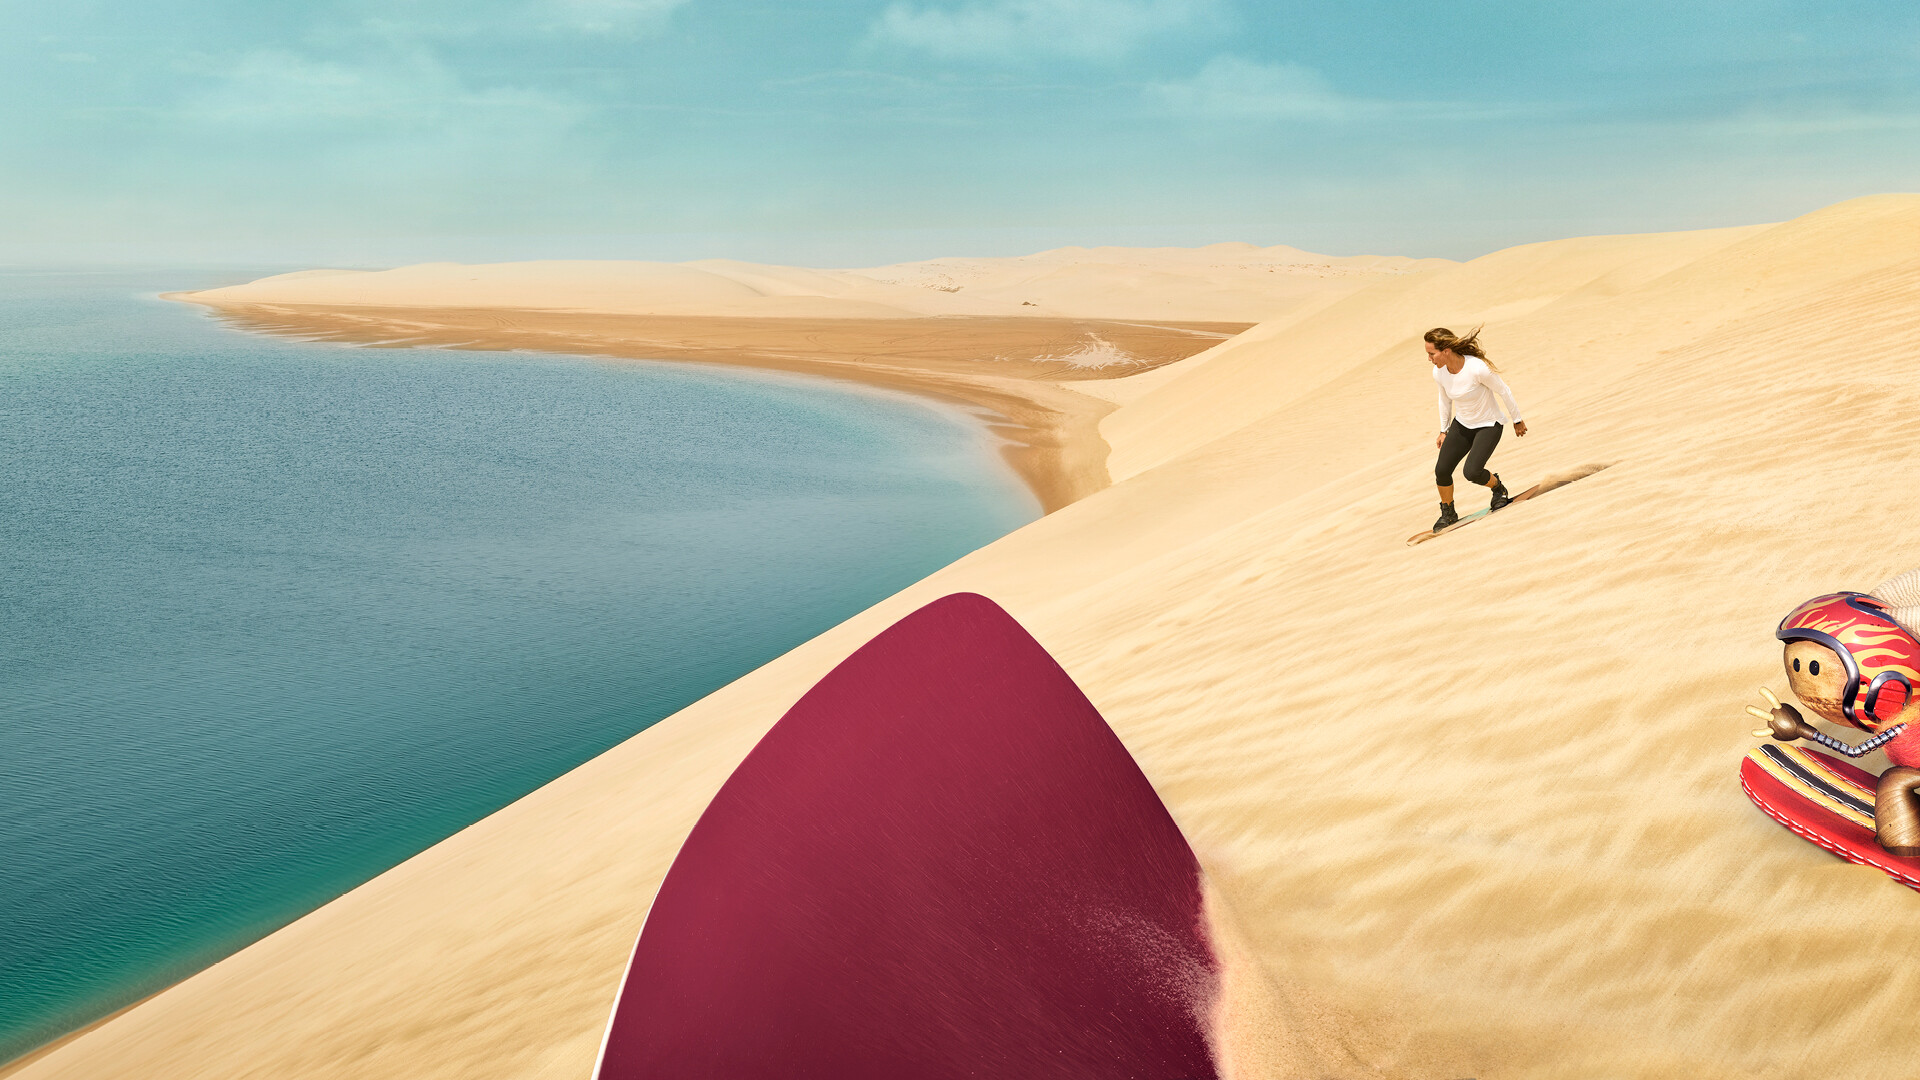 qatar tourism campaign